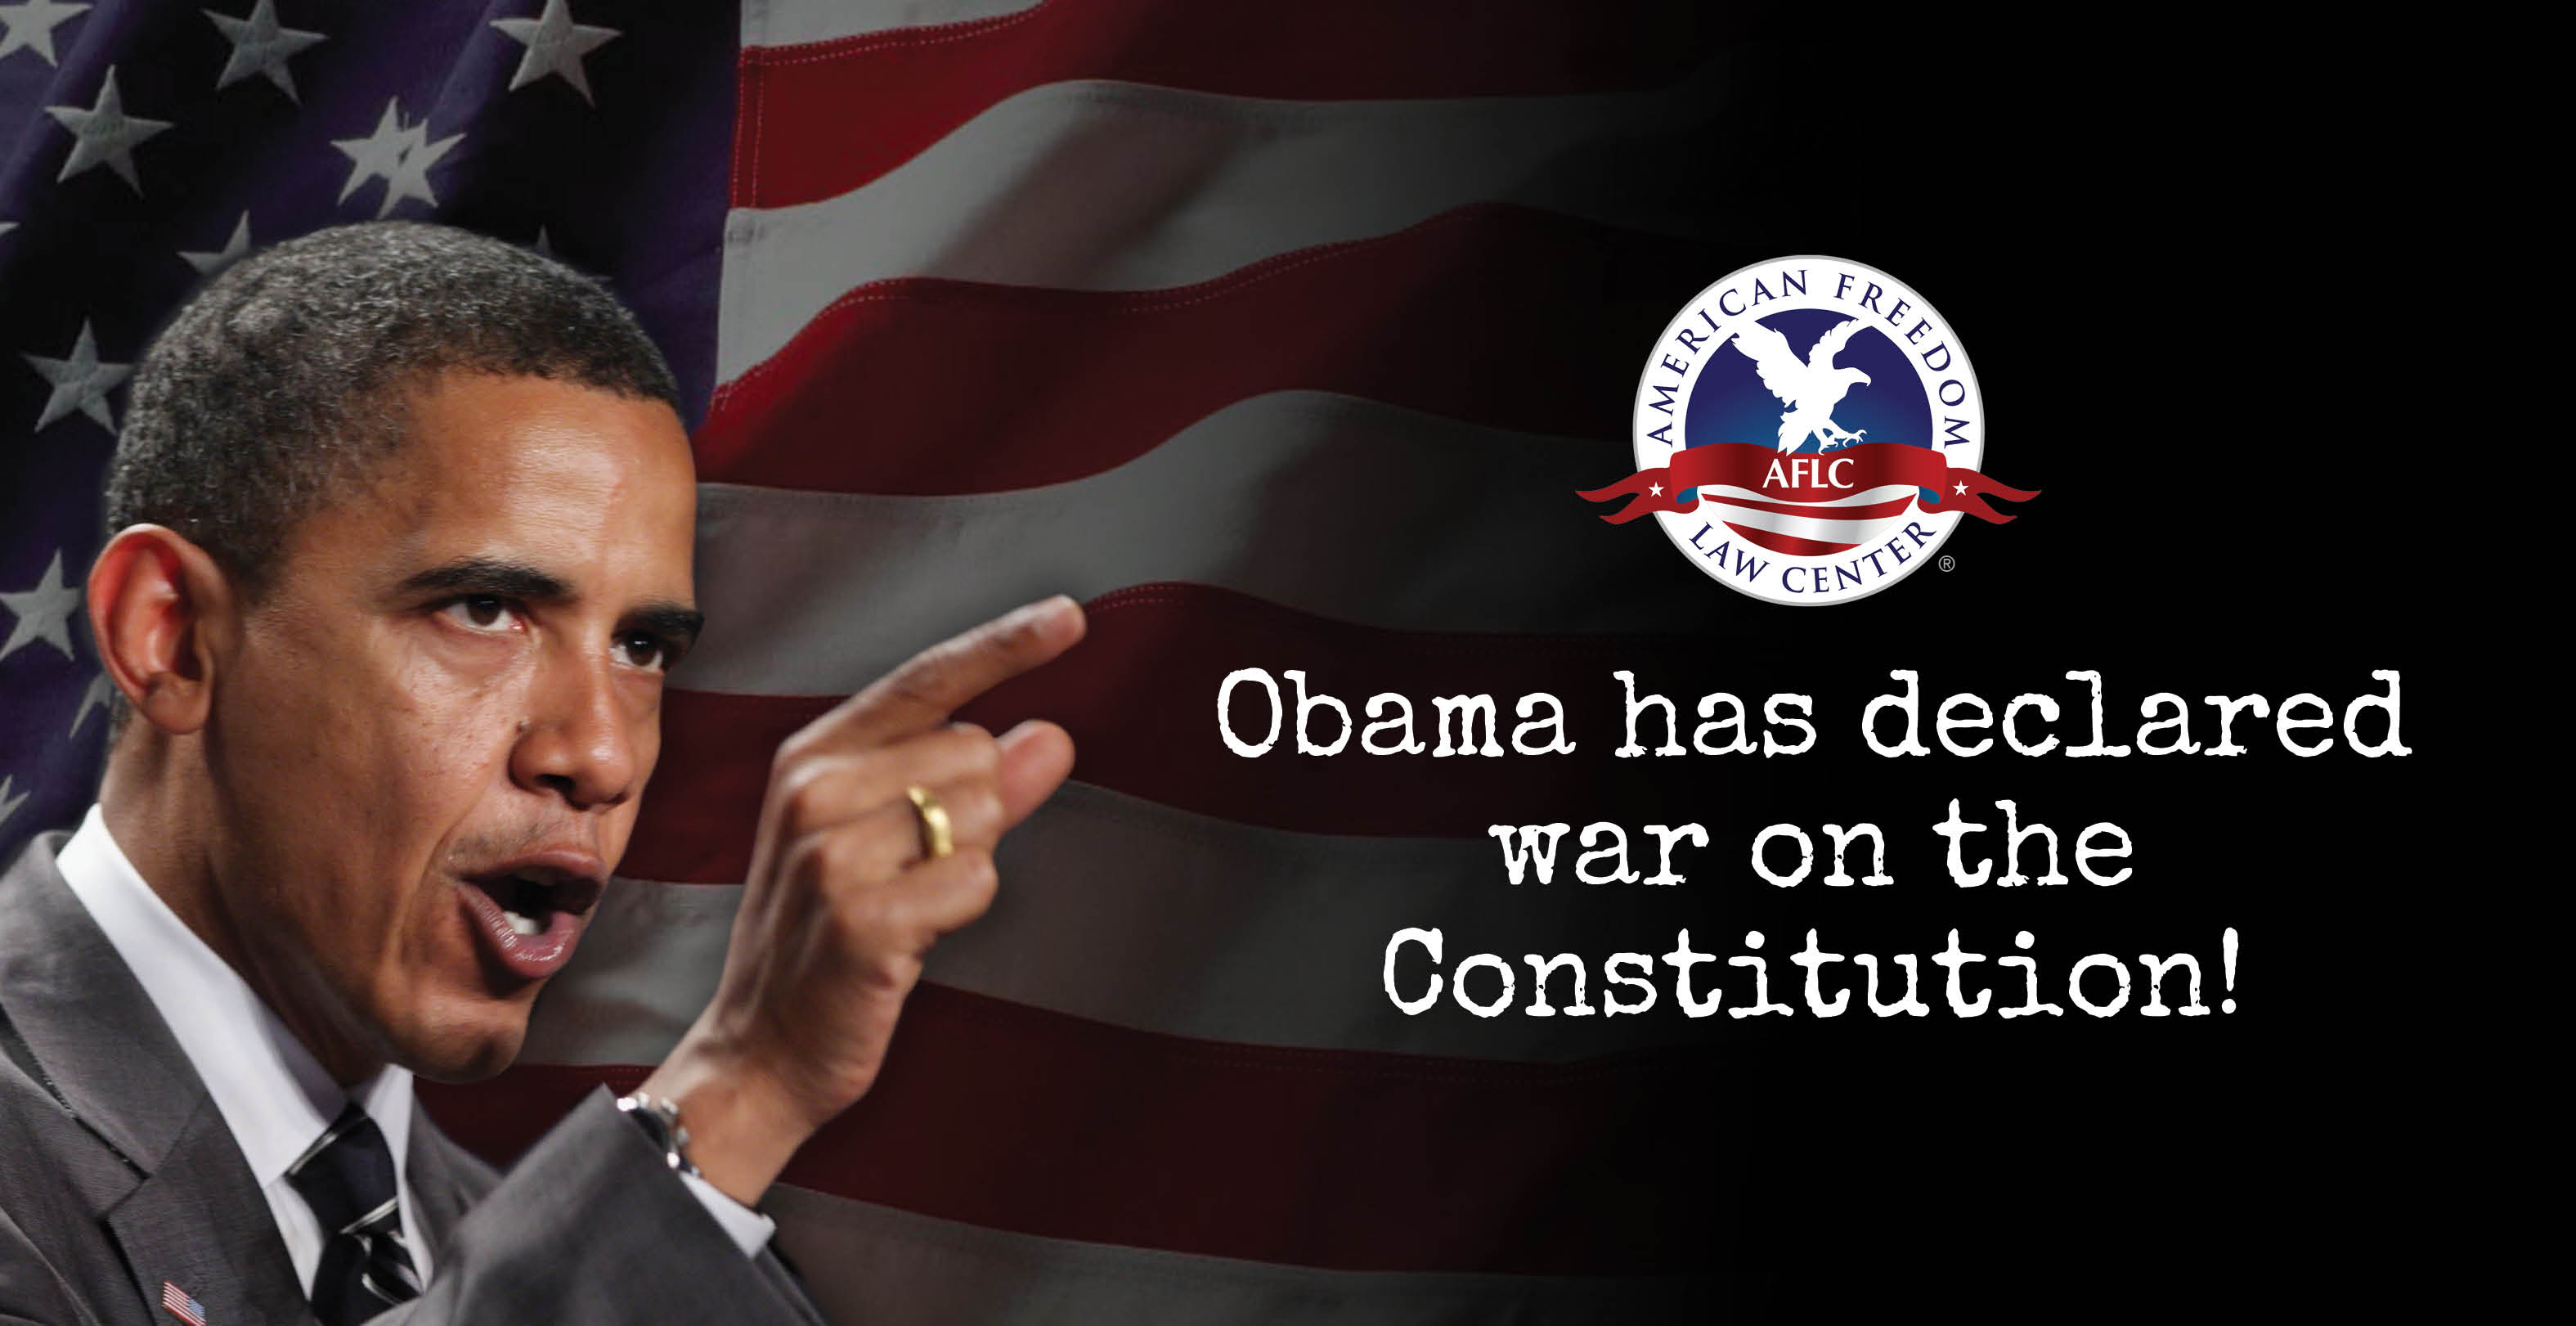 http://www.americanfreedomlawcenter.org/wp-content/uploads/2015/08/AFLC_ObamaWar_banner-II.jpg